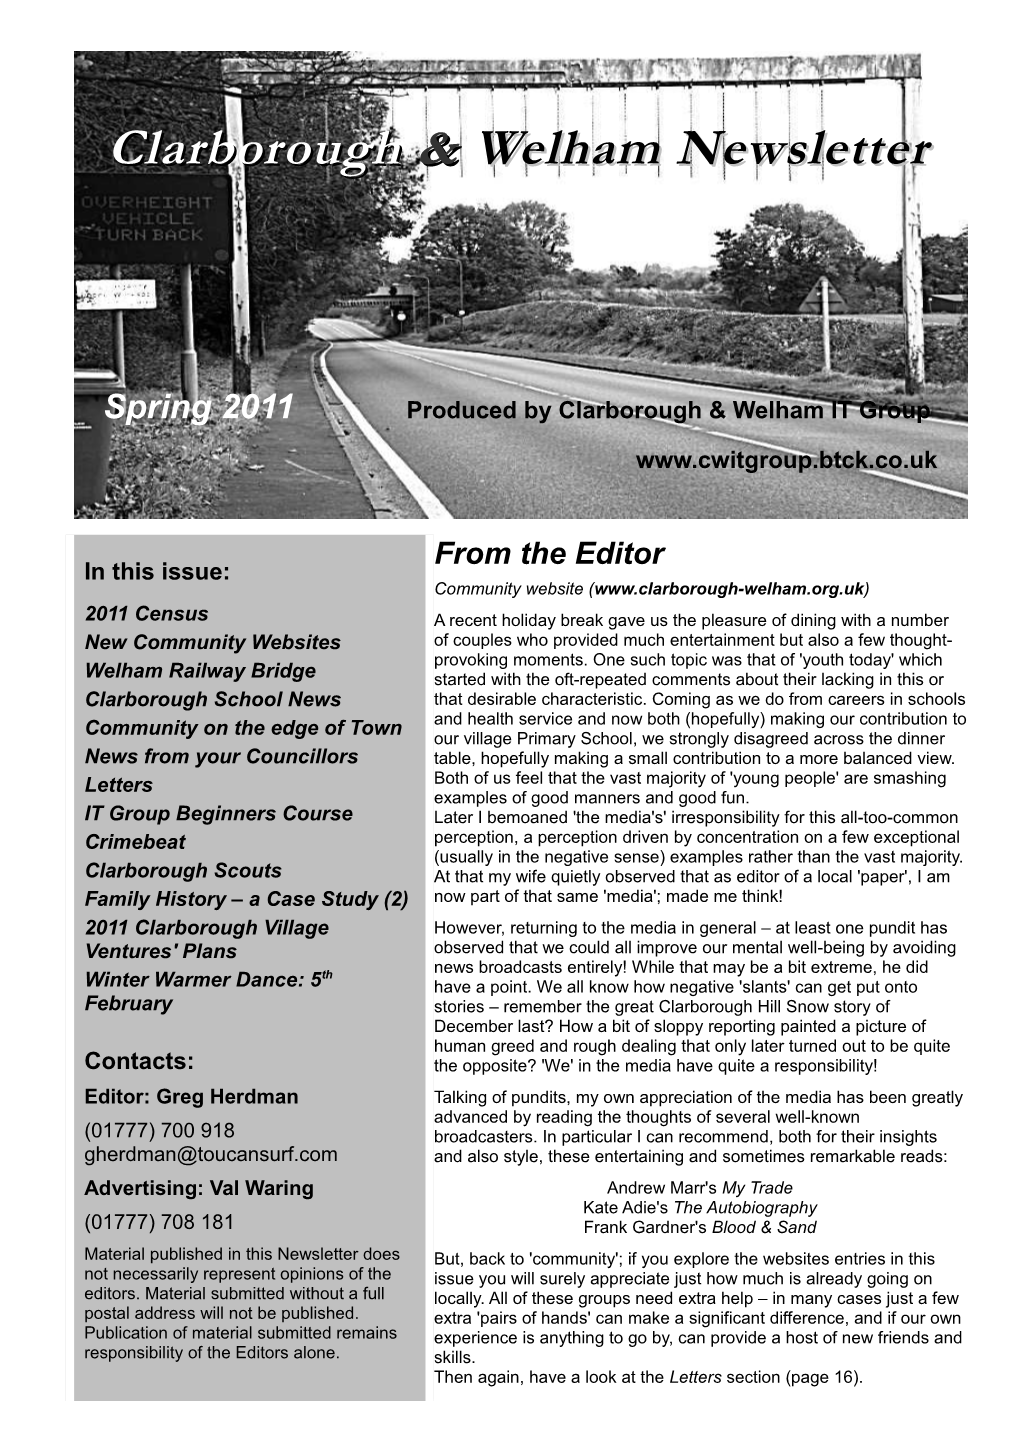 Clarborough & Welham Newsletter : Spring 2011